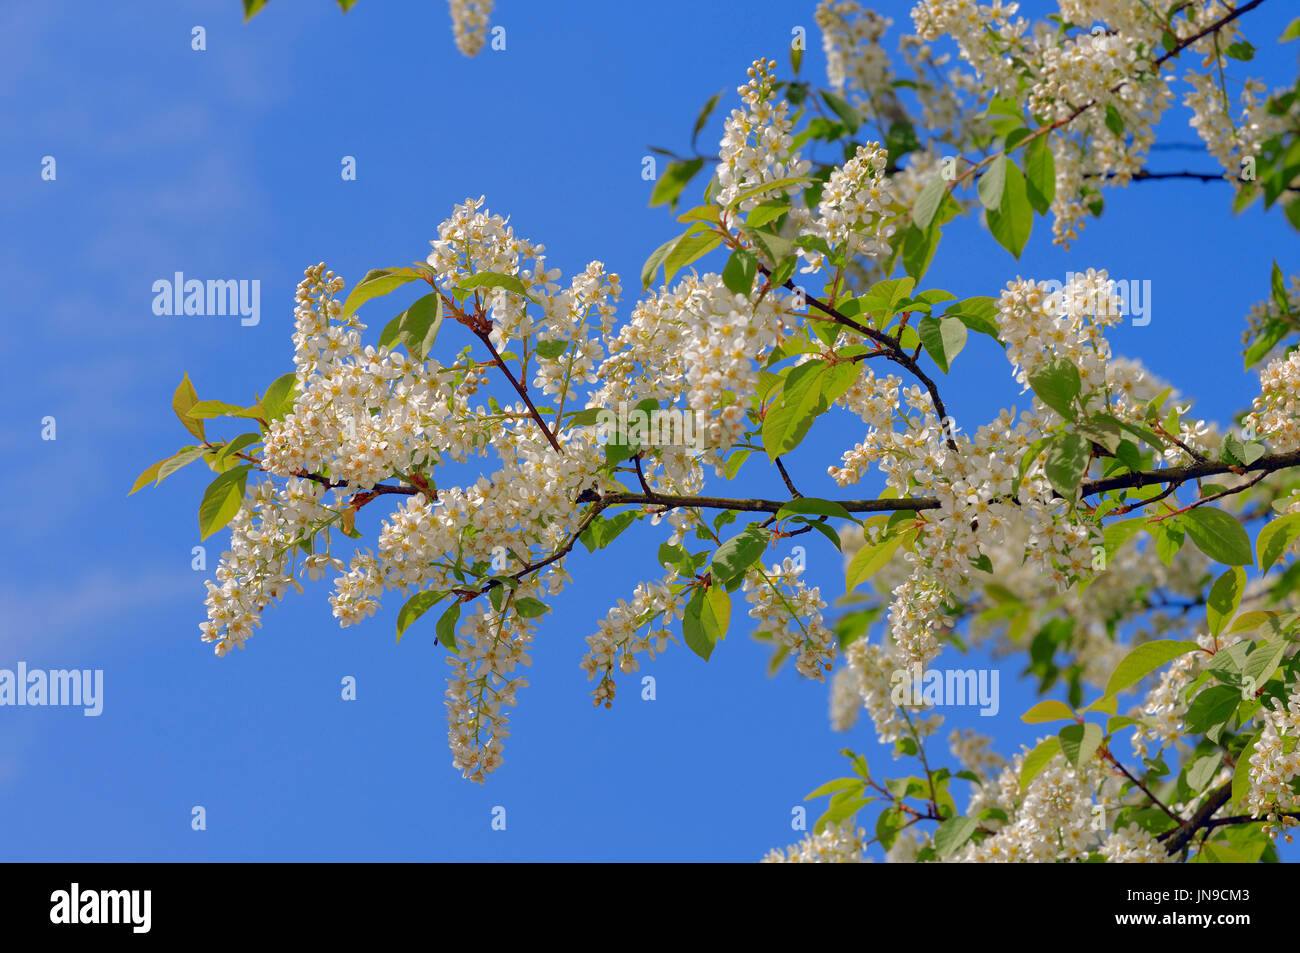 Europeas de Aves Cerezo, Renania del Norte-Westfalia, Alemania / (Prunus avium) Padus padus, | Gewoehnliche Traubenkirsche, Nordrhein-Westfalen, Deutschland Foto de stock